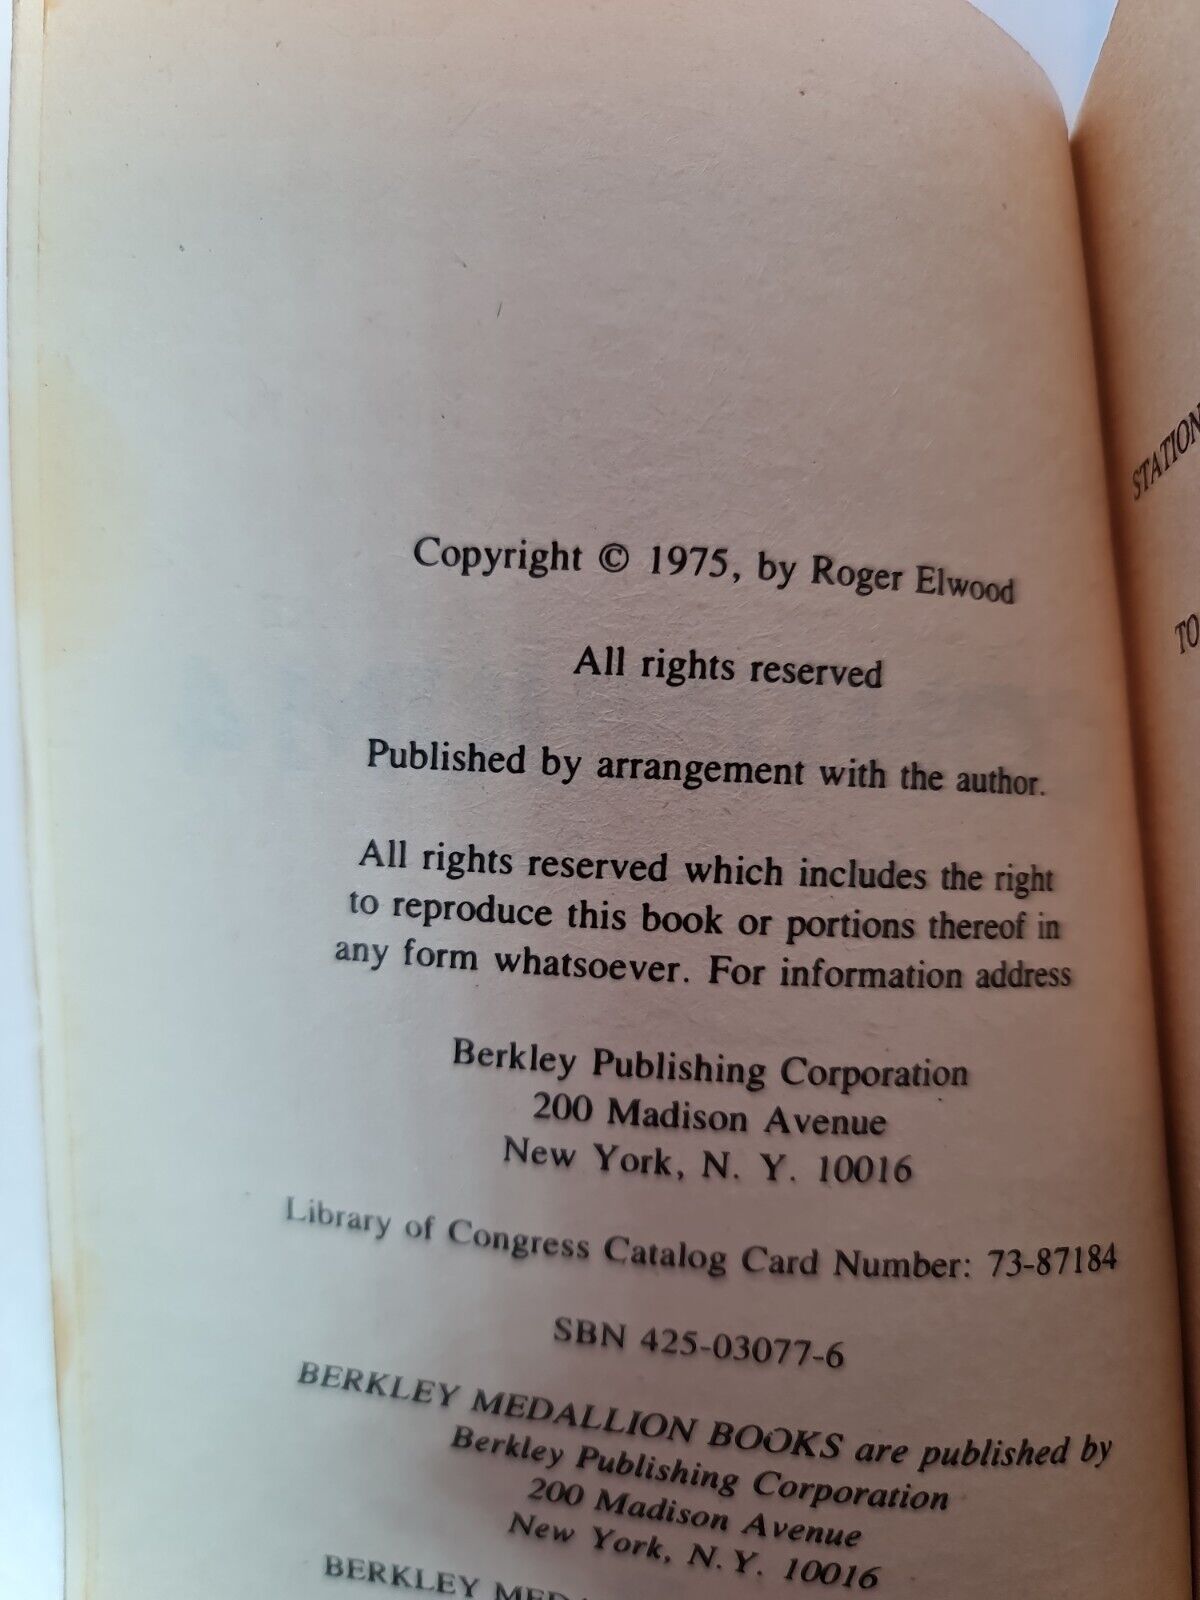 Continuum 4 eds Roger Elwood (1976)